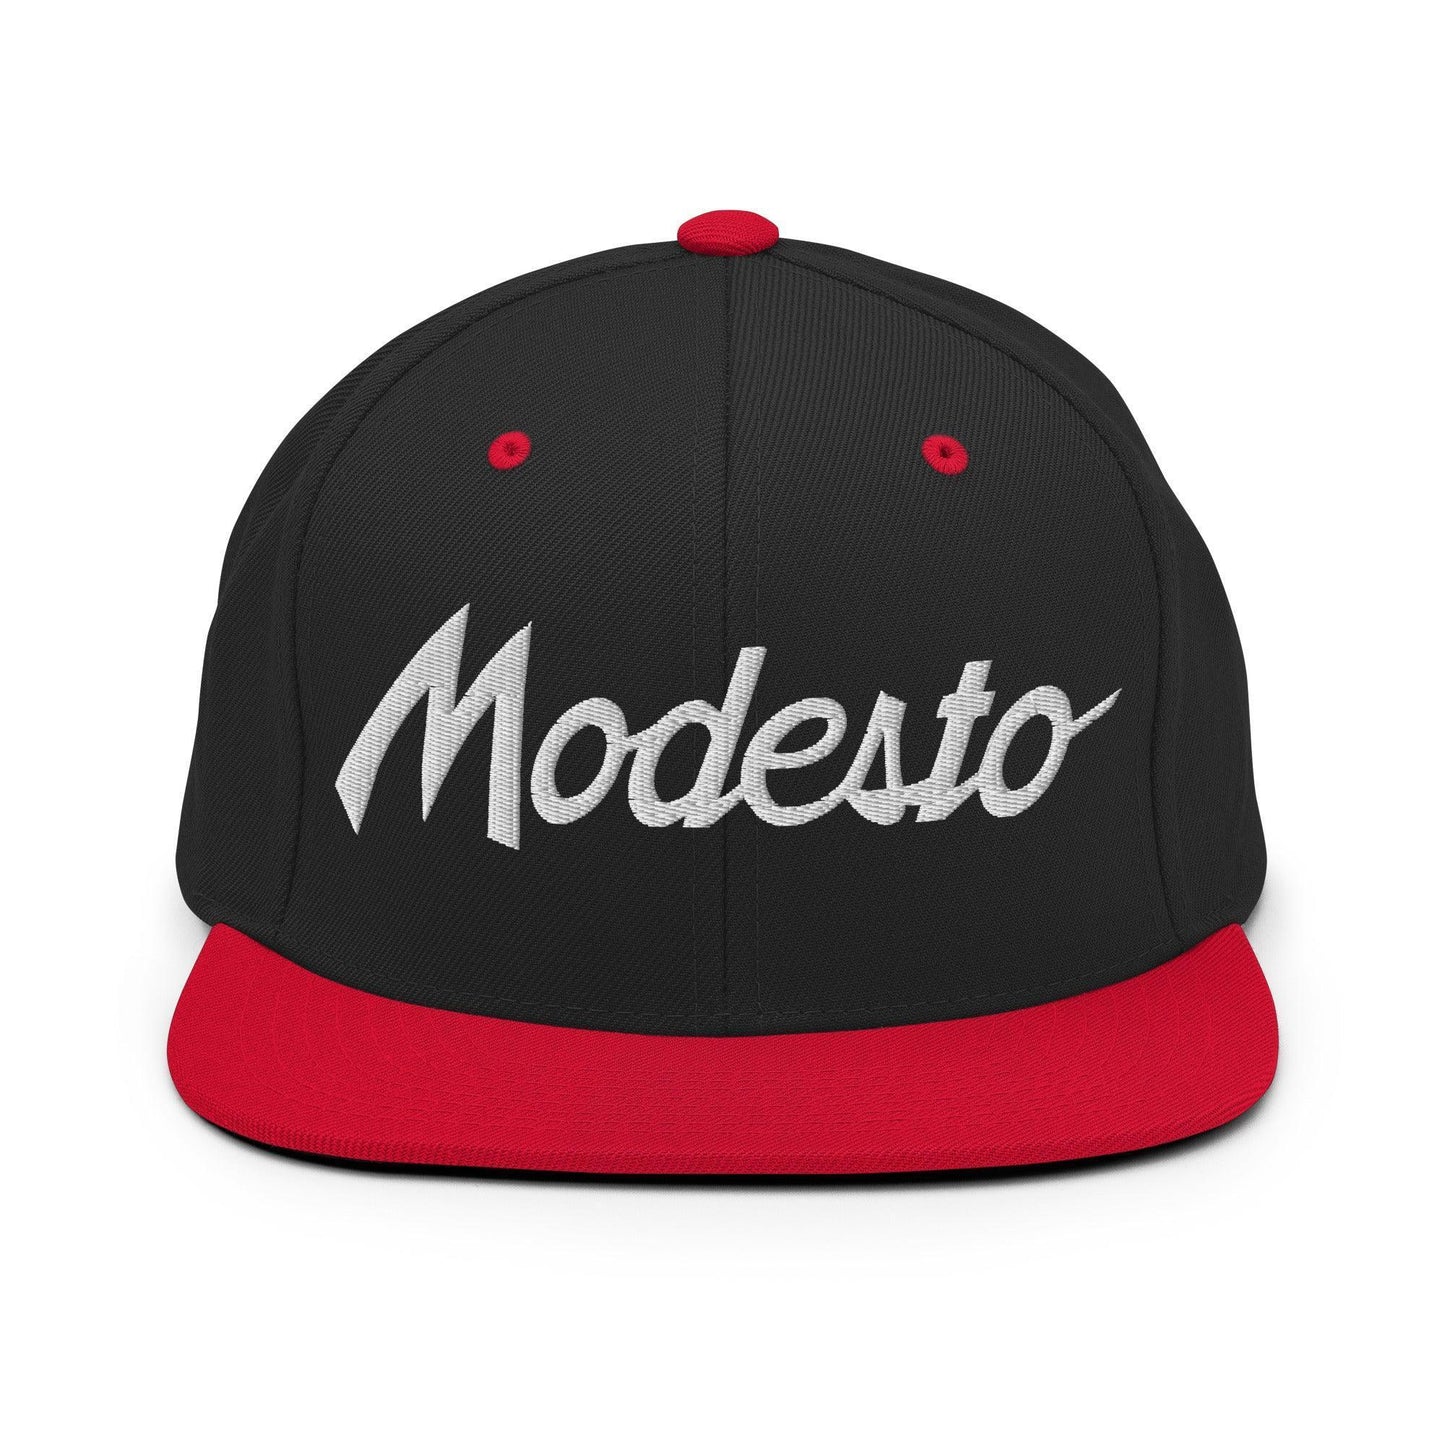 Modesto Script Snapback Hat Black Red